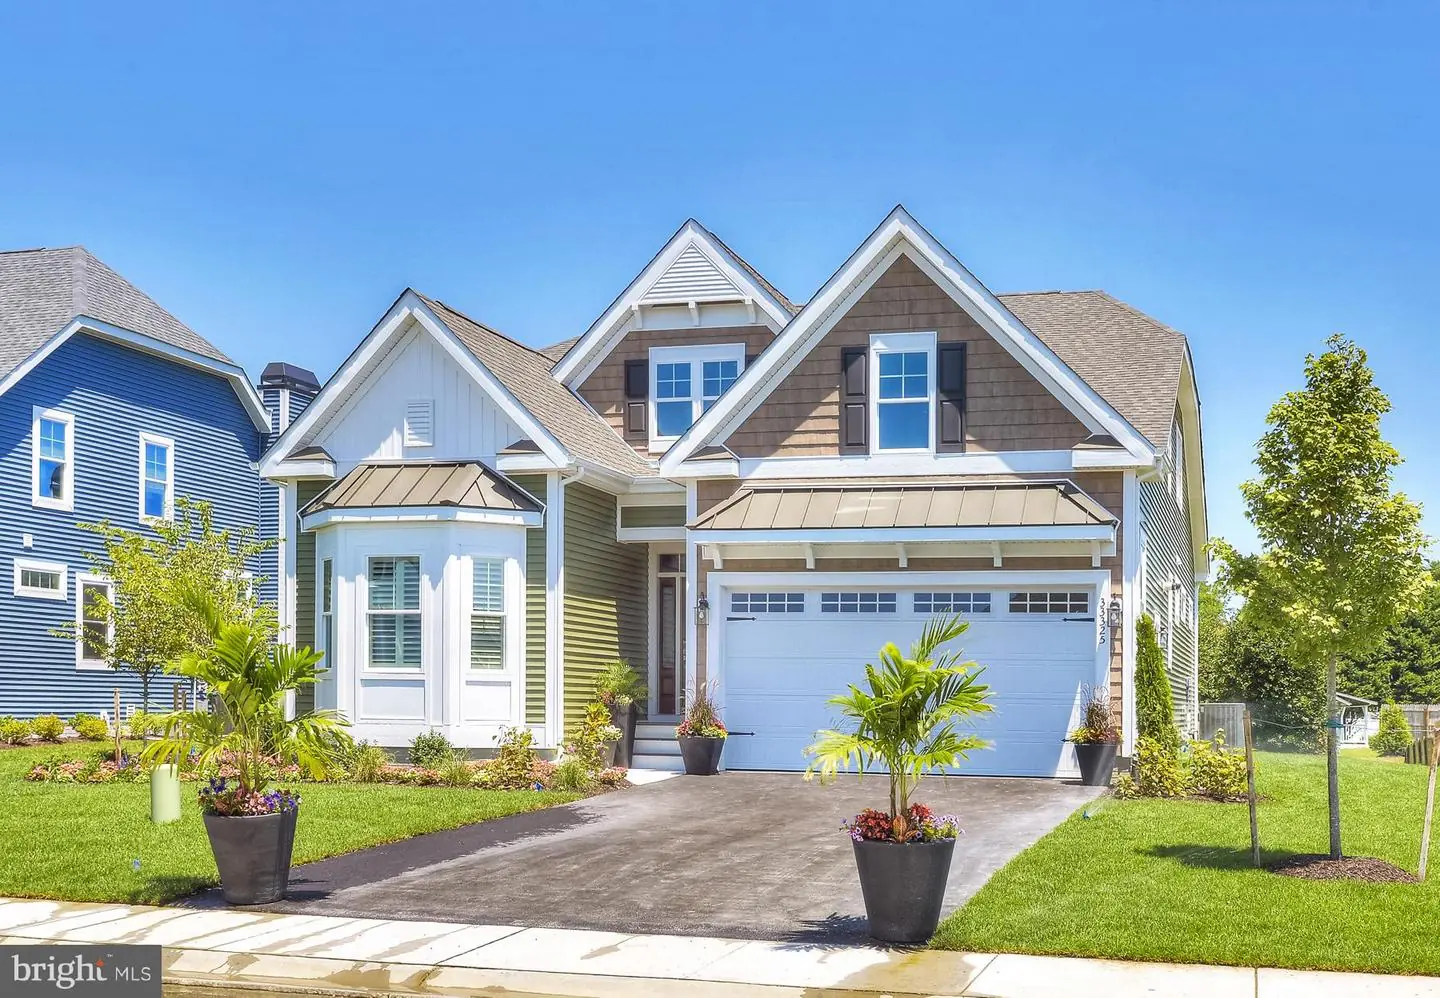 DESU2031076-801956180356-2024-01-30-16-56-09 Bluebell To-be-built Home Tbd | Millsboro, DE Real Estate For Sale | MLS# Desu2031076  - David T. King Realtor